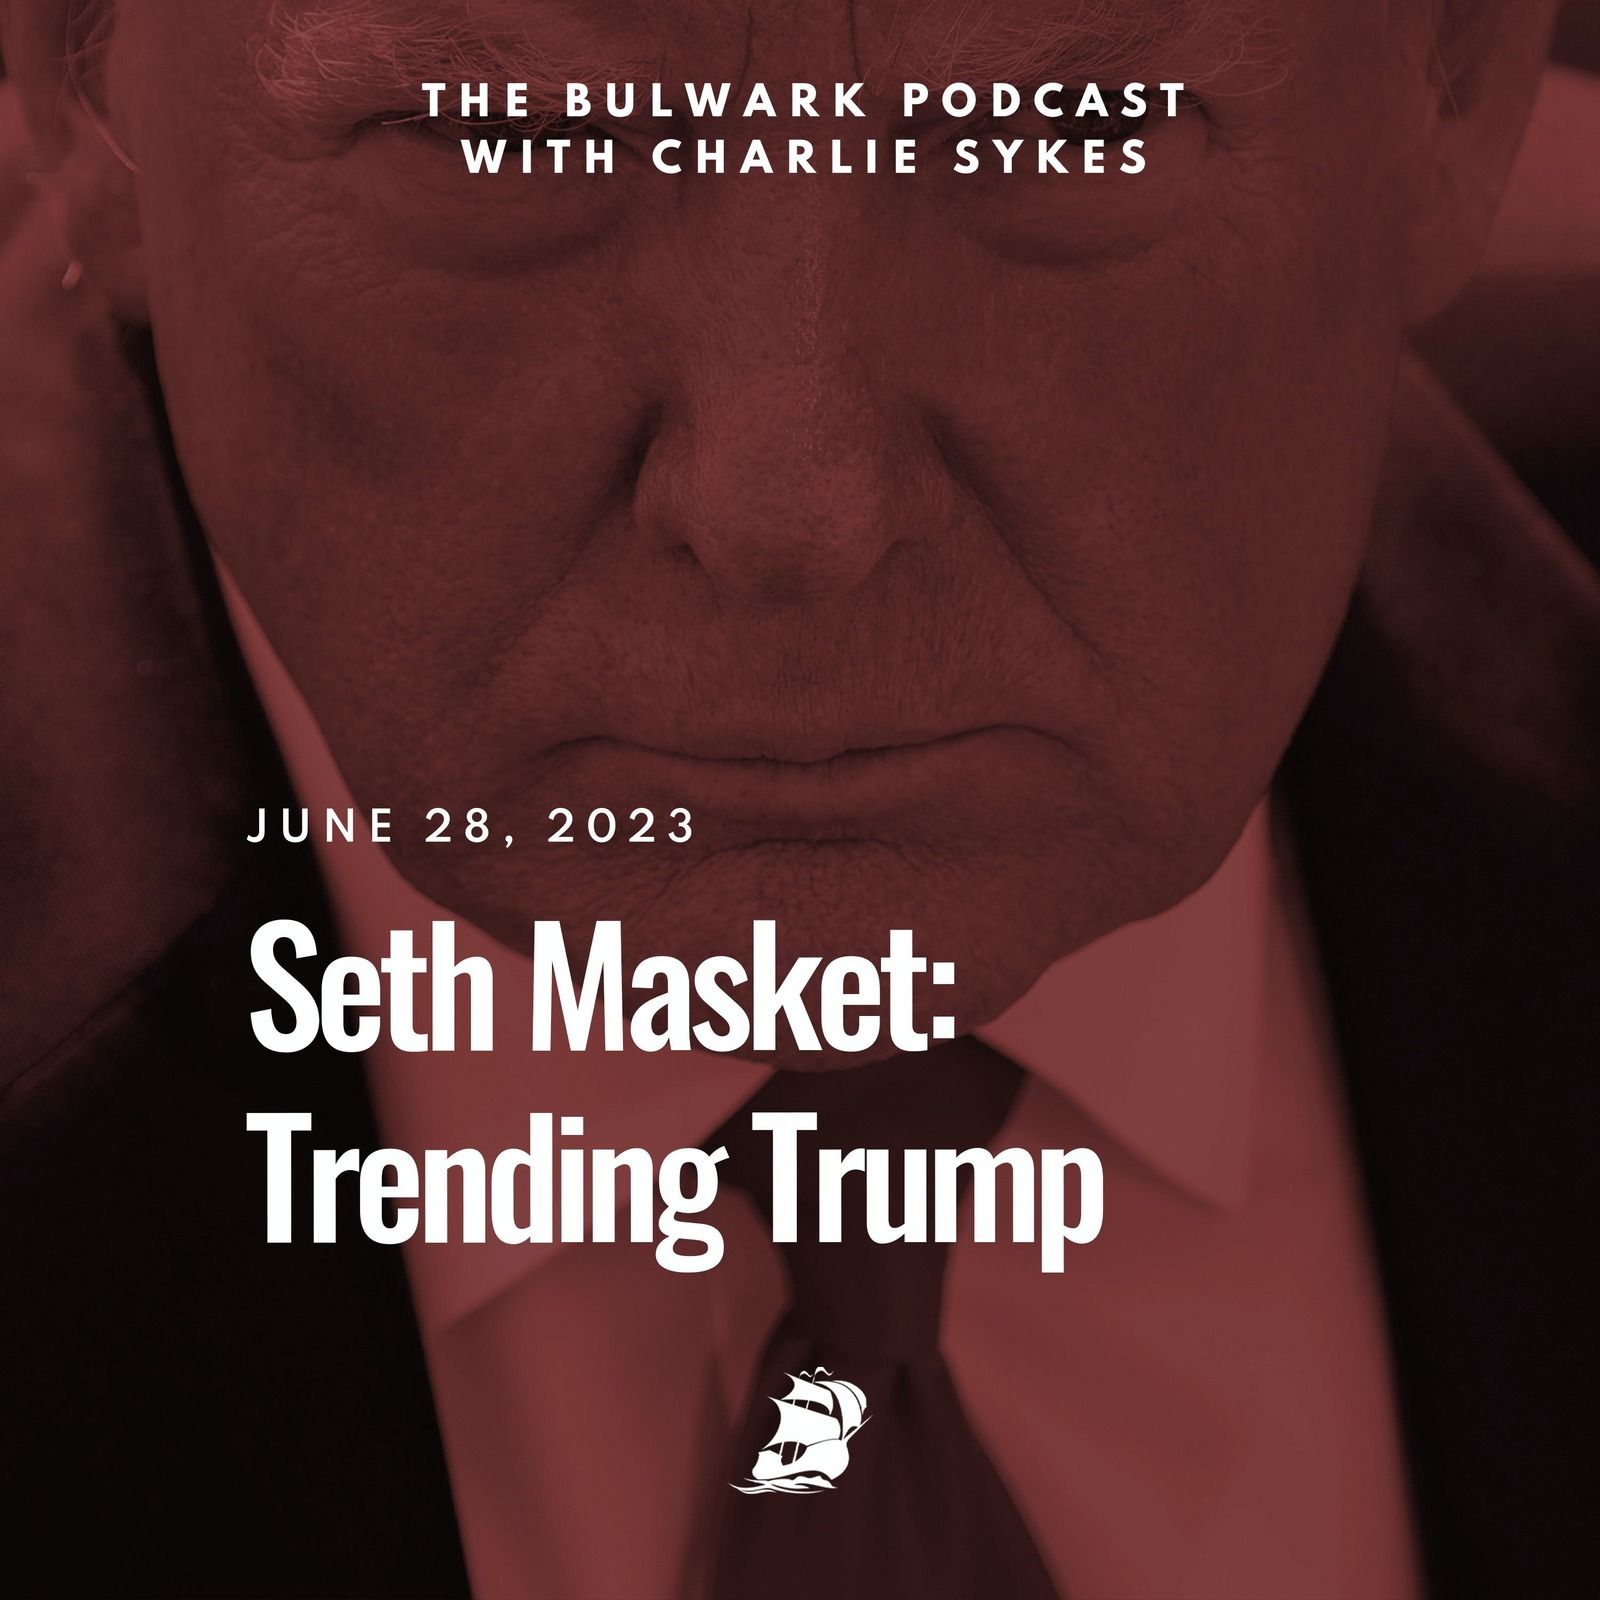 Seth Masket: Trending Trump by The Bulwark Podcast